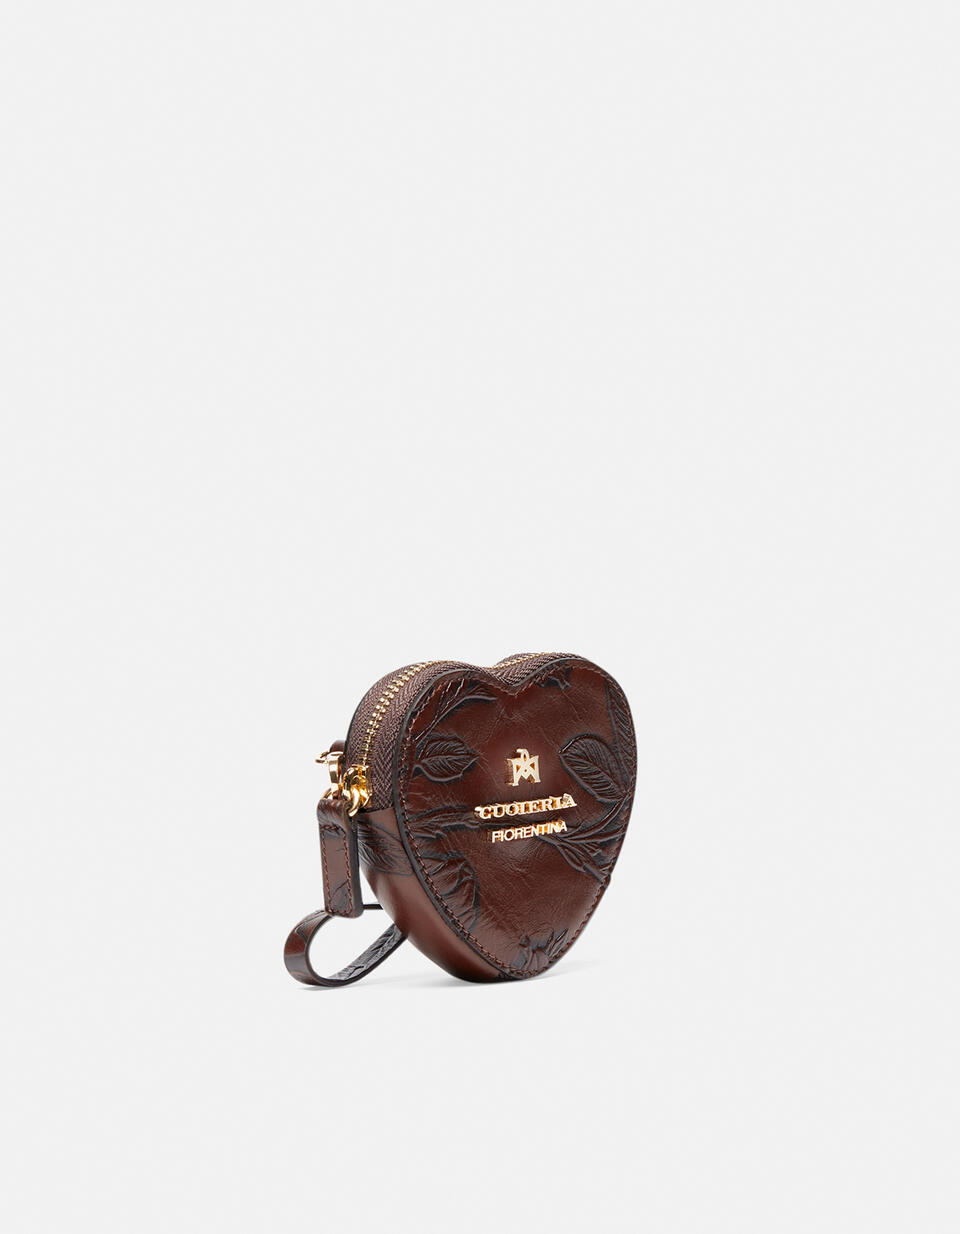 Heart purse - Women's Accessories | Accessories Mimì MOGANO - Women's Accessories | AccessoriesCuoieria Fiorentina